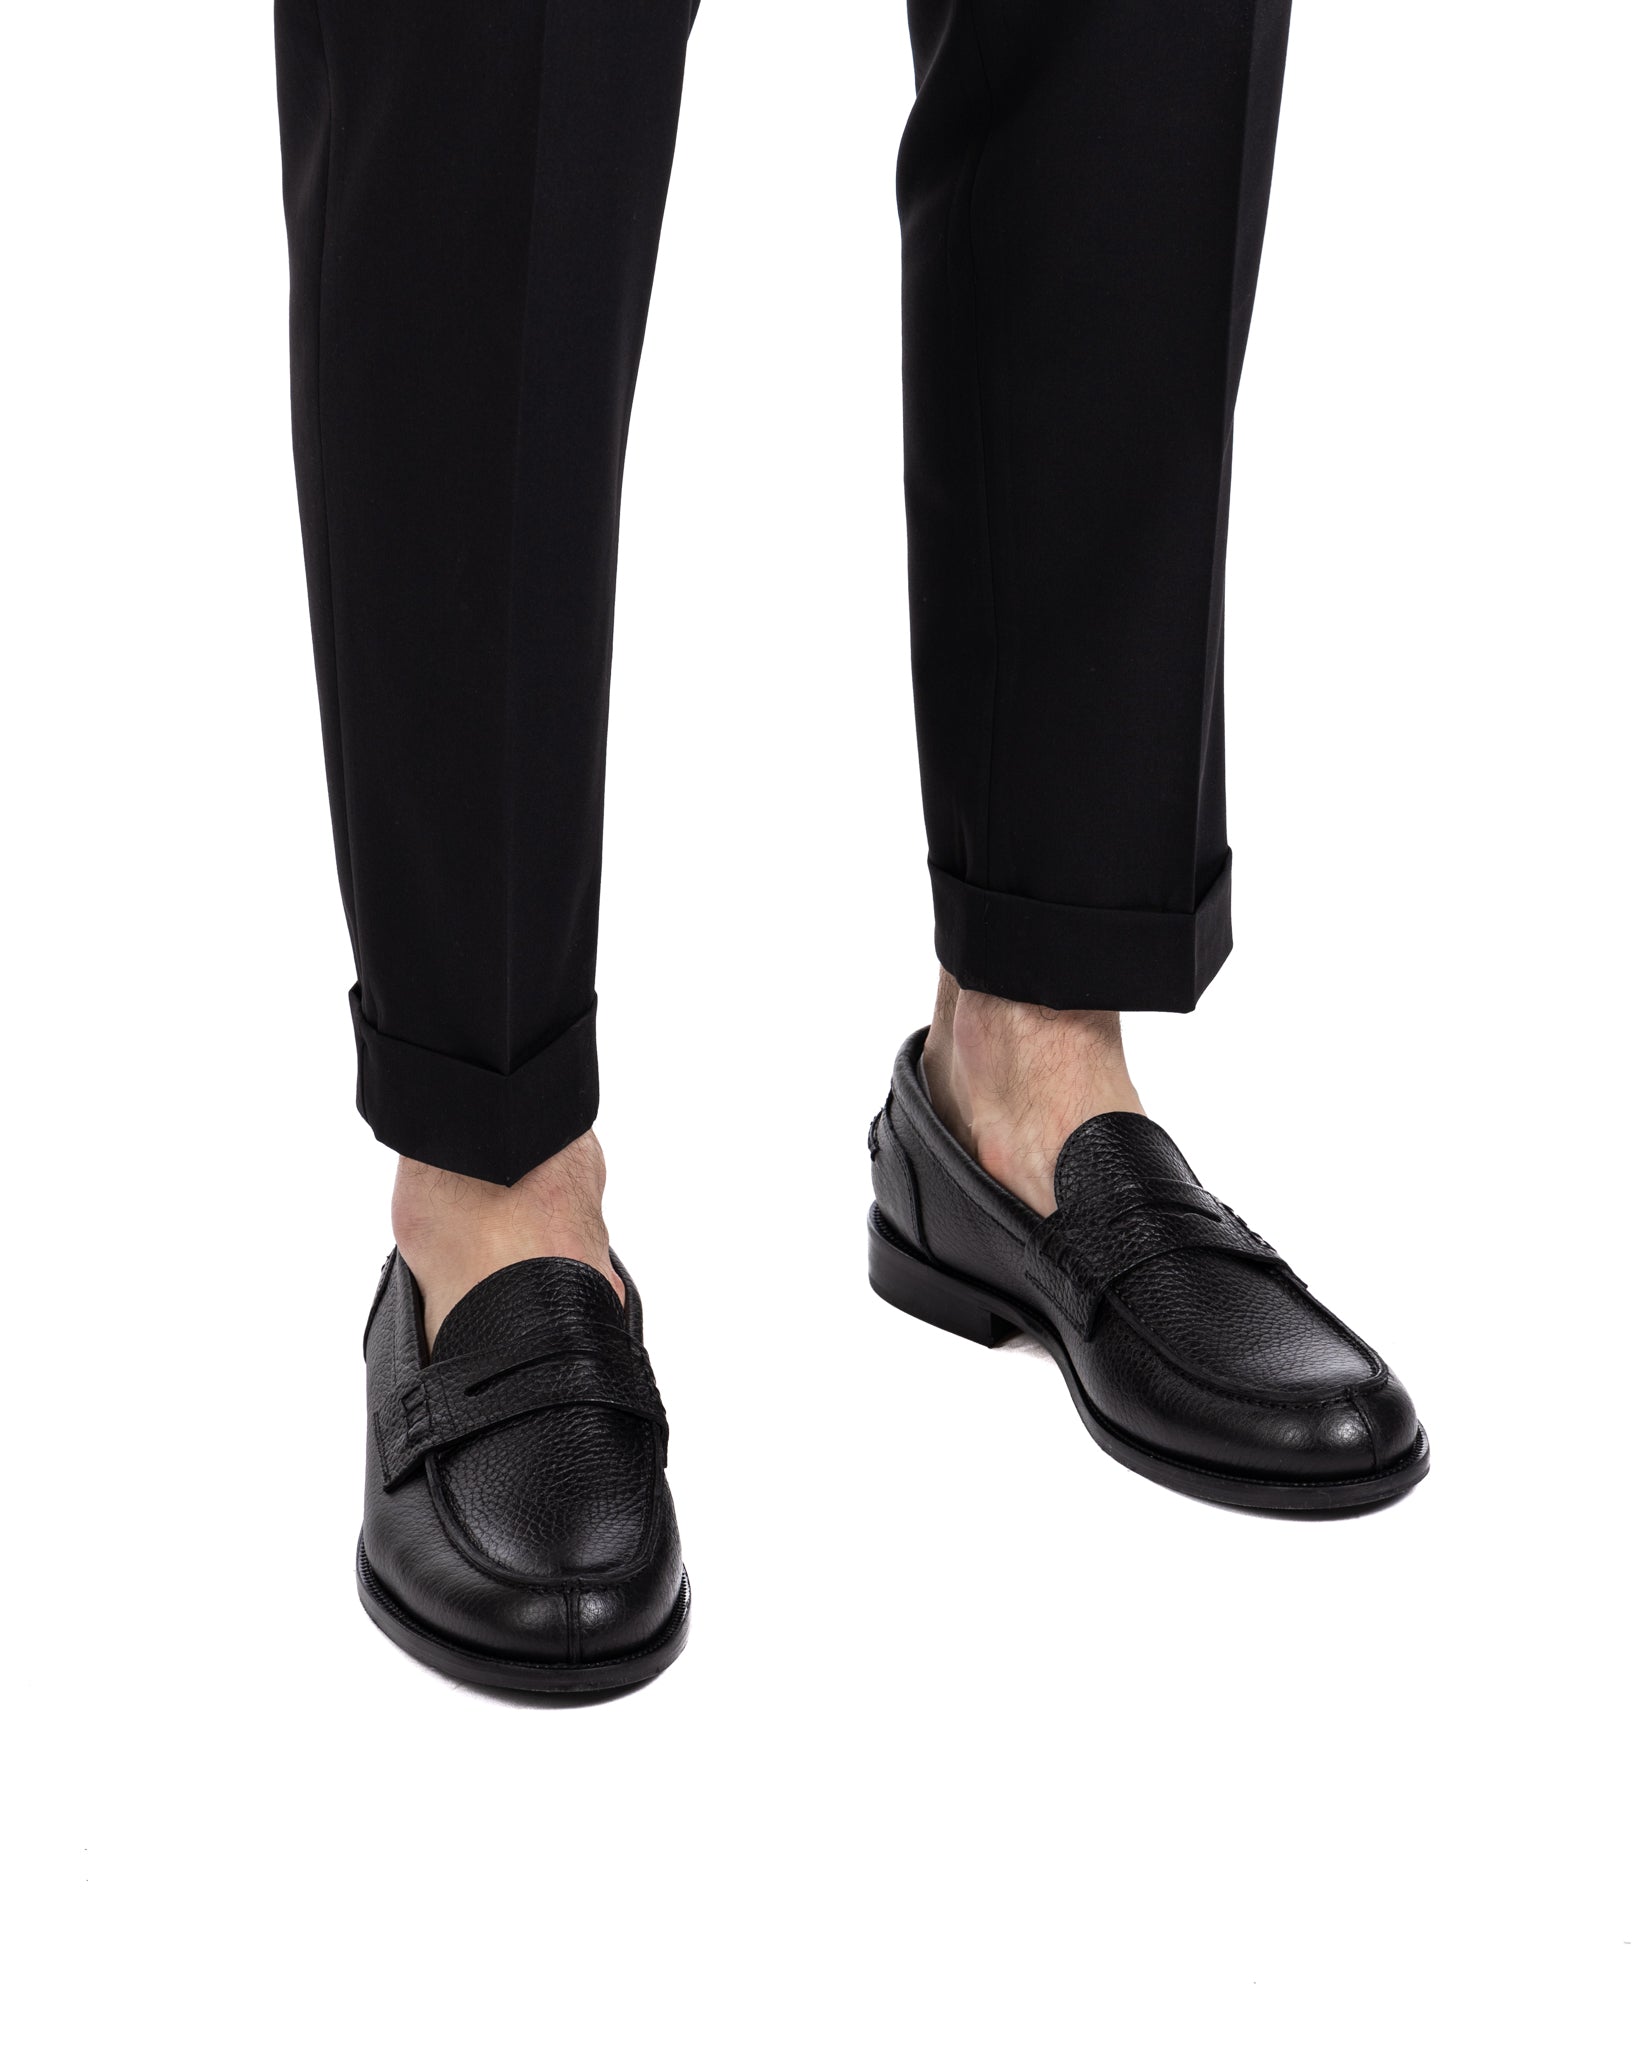 Trani - pantalon noir à boucles